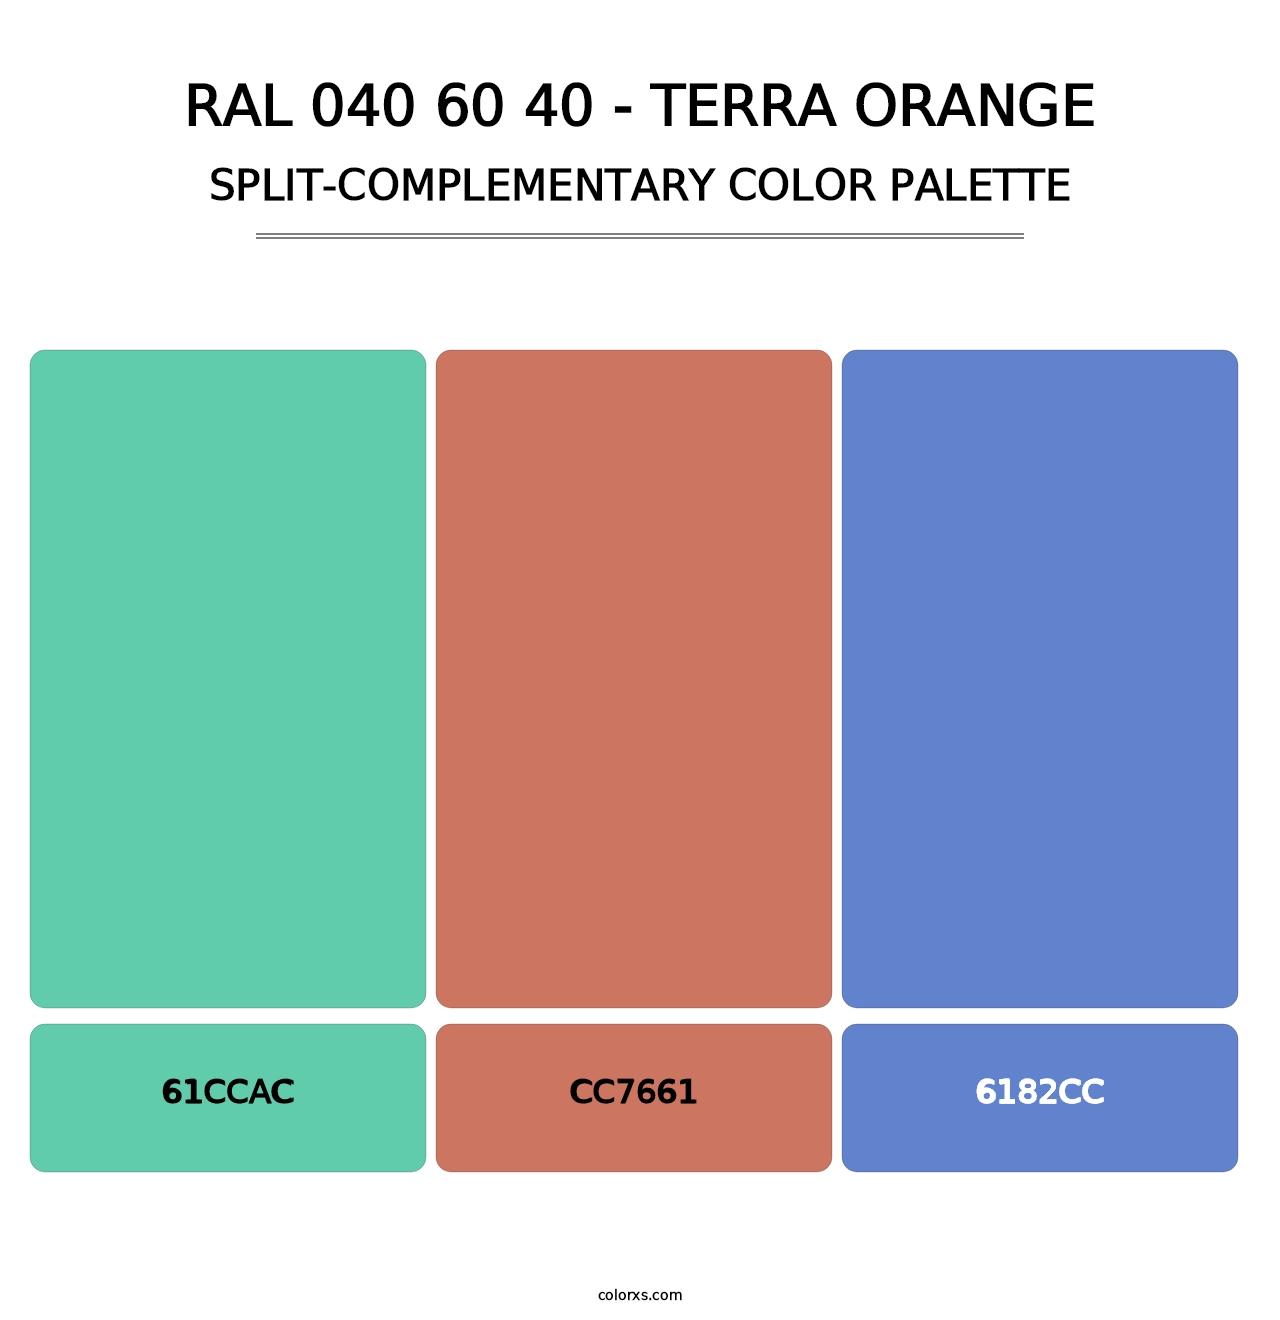 RAL 040 60 40 - Terra Orange - Split-Complementary Color Palette